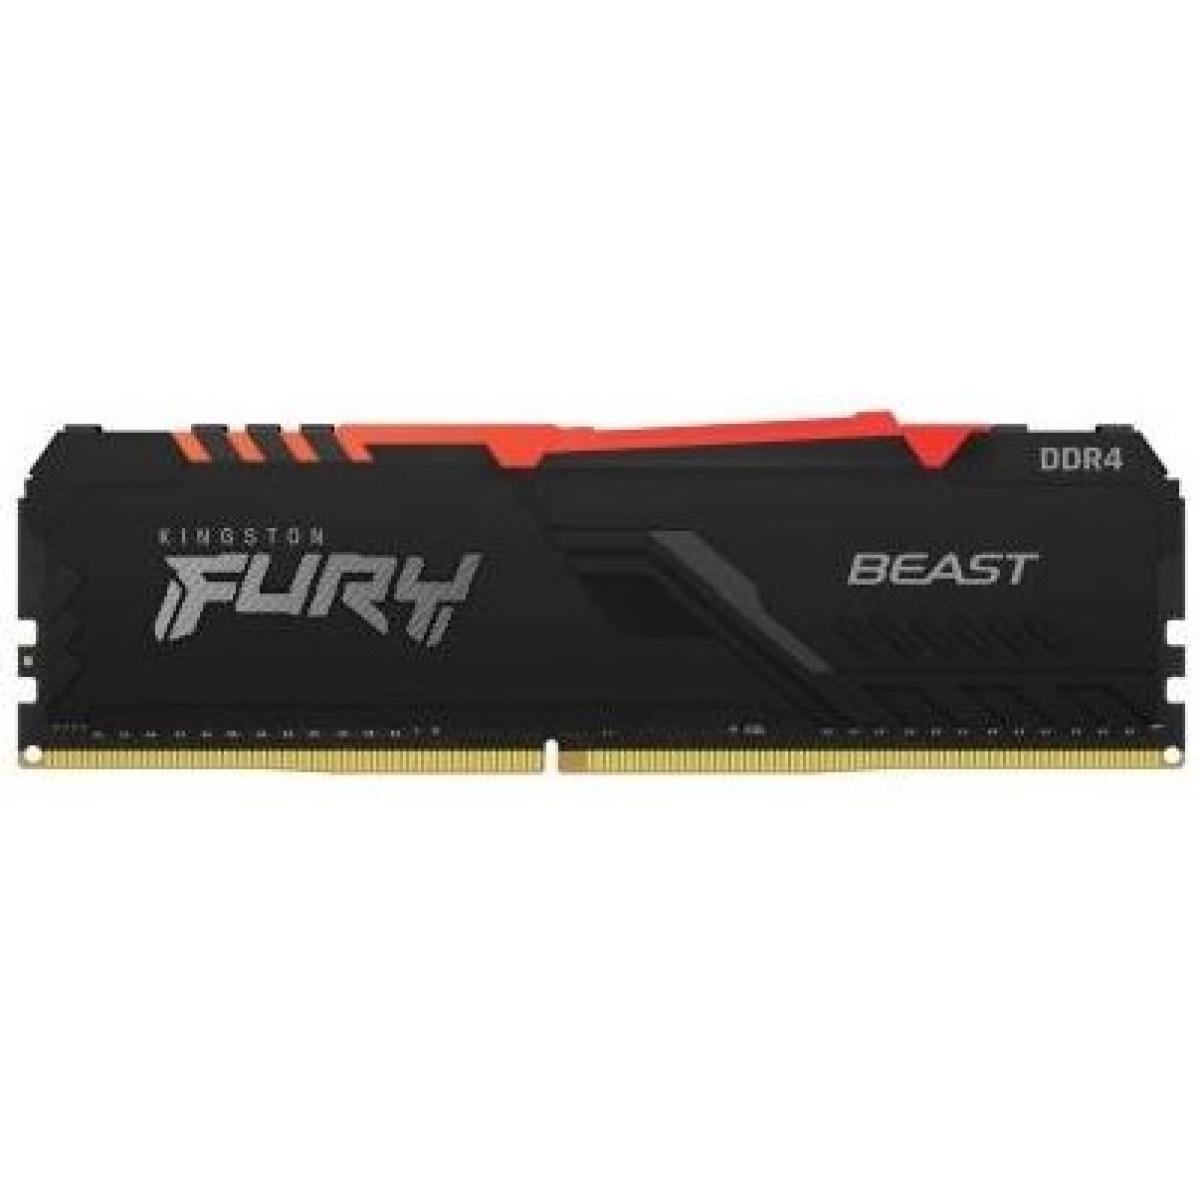 HYPERX RAM KingSton Fury Beast 8GB DDR4 3600MT/s-CL17 RGB Desktop Memory